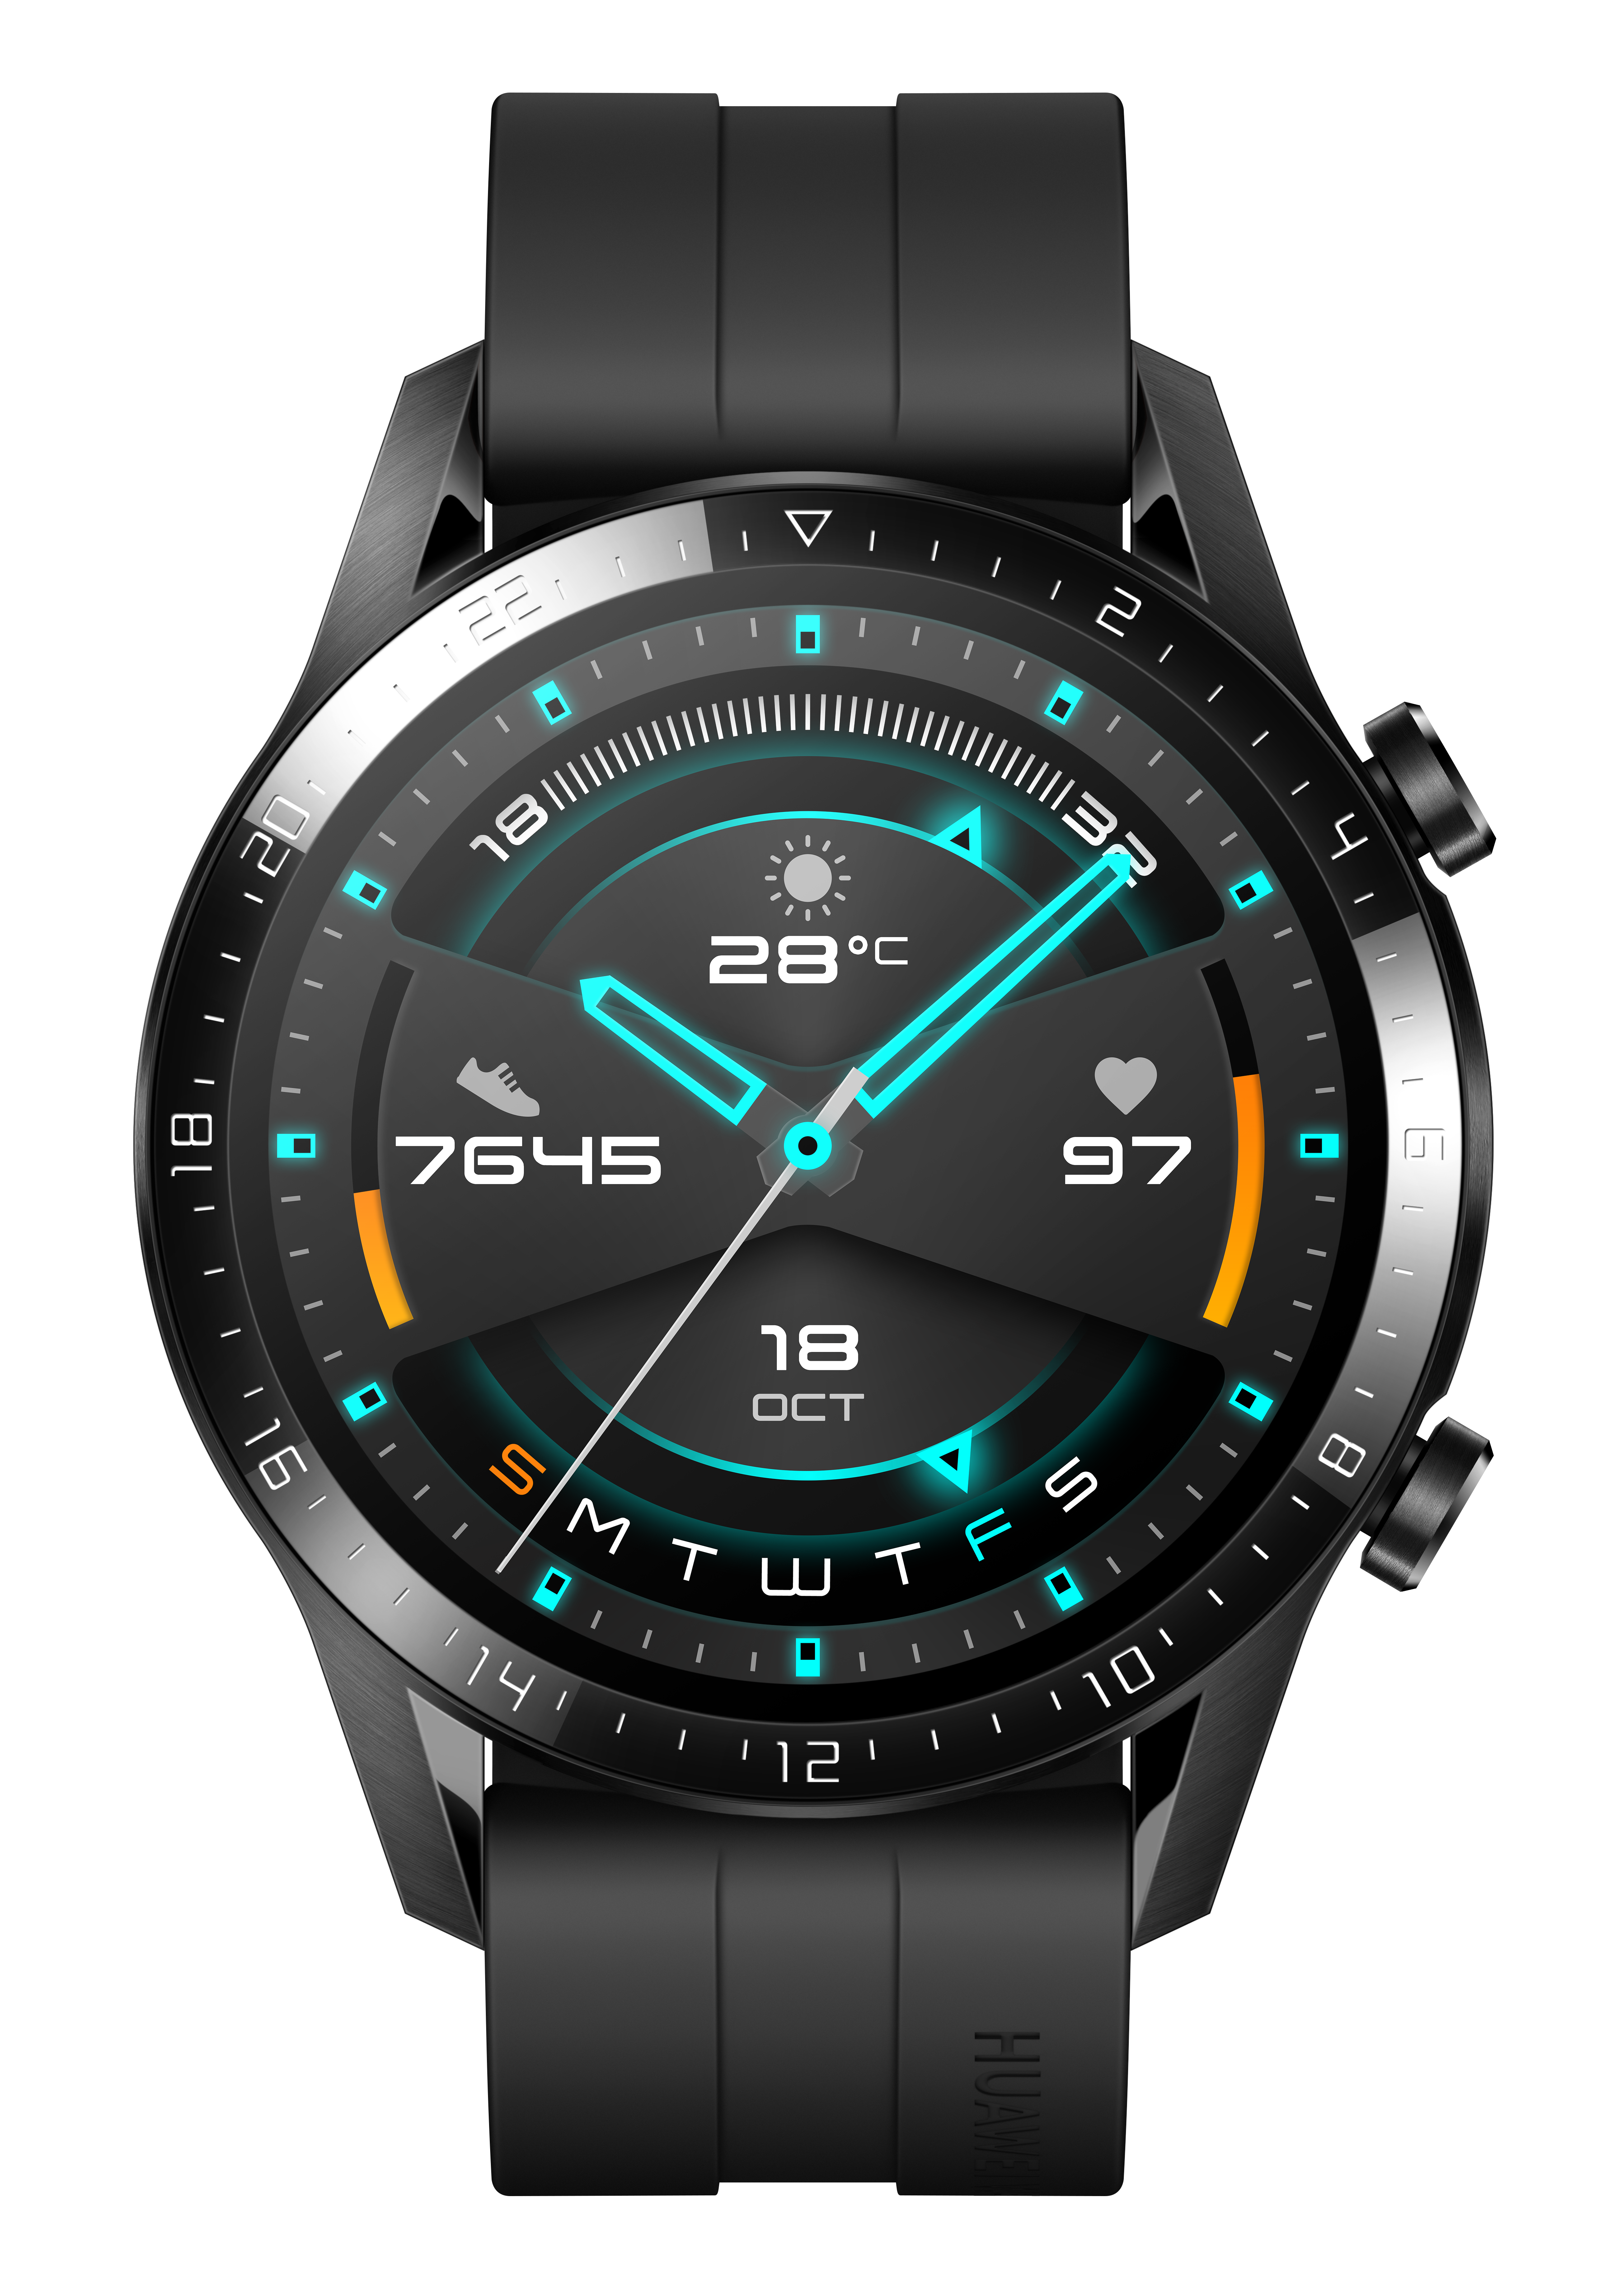 Huawei watch gt4 46mm цены. Смарт-часы Хуавей gt2. Часы Хуавей gt2. Смарт часы Huawei gt2. Huawei watch gt 2 46mm.